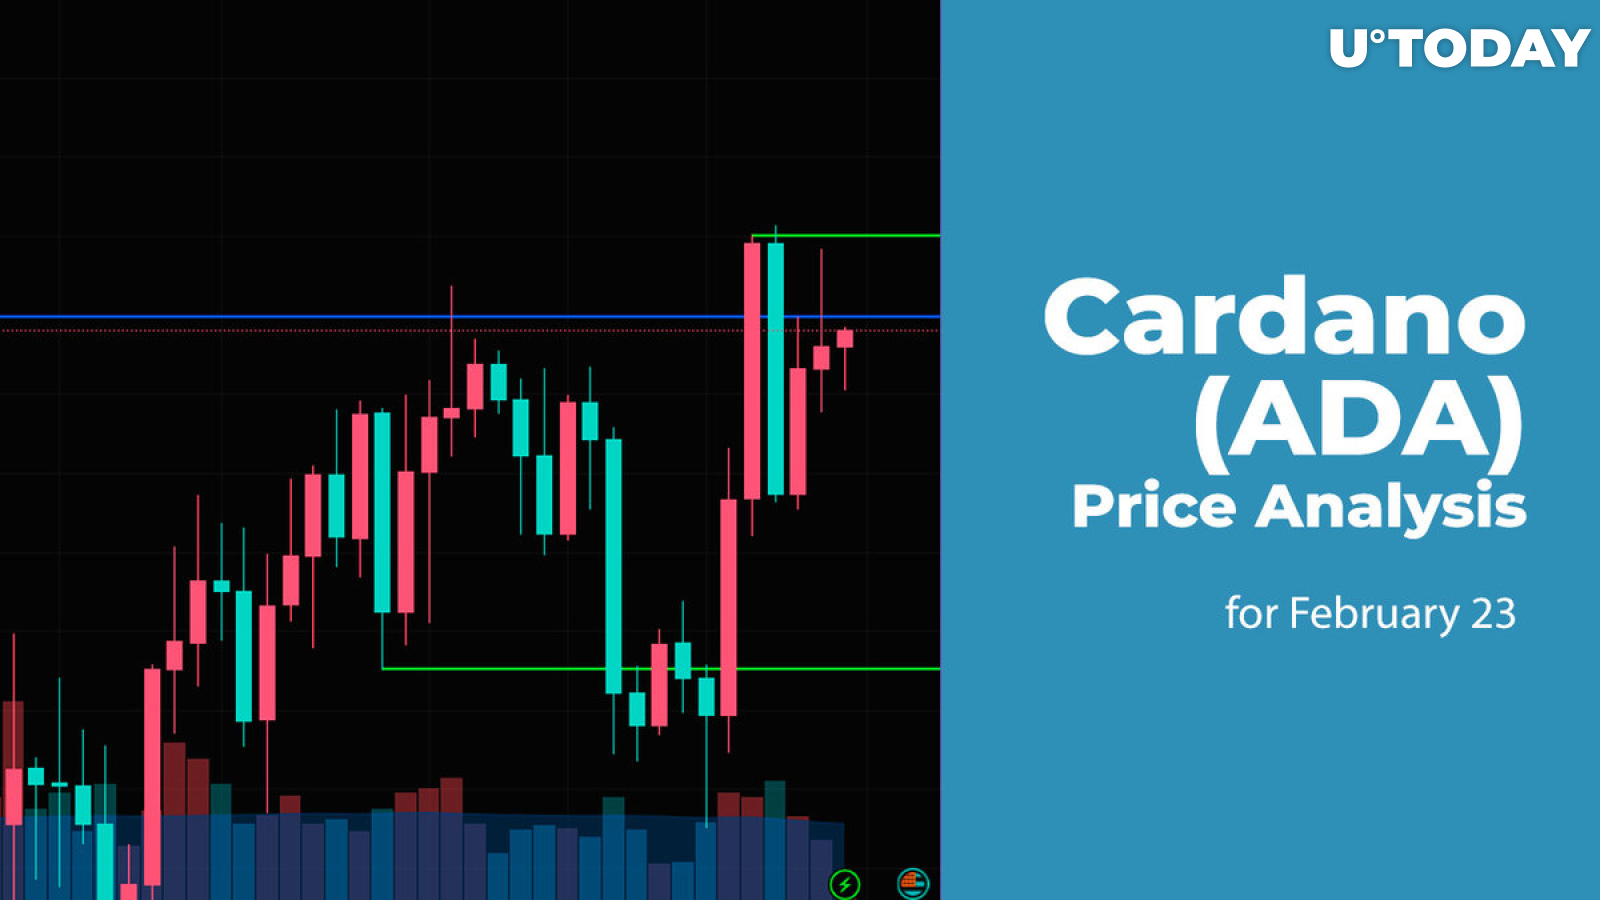 Cardano (ADA) Price Analysis for February 23